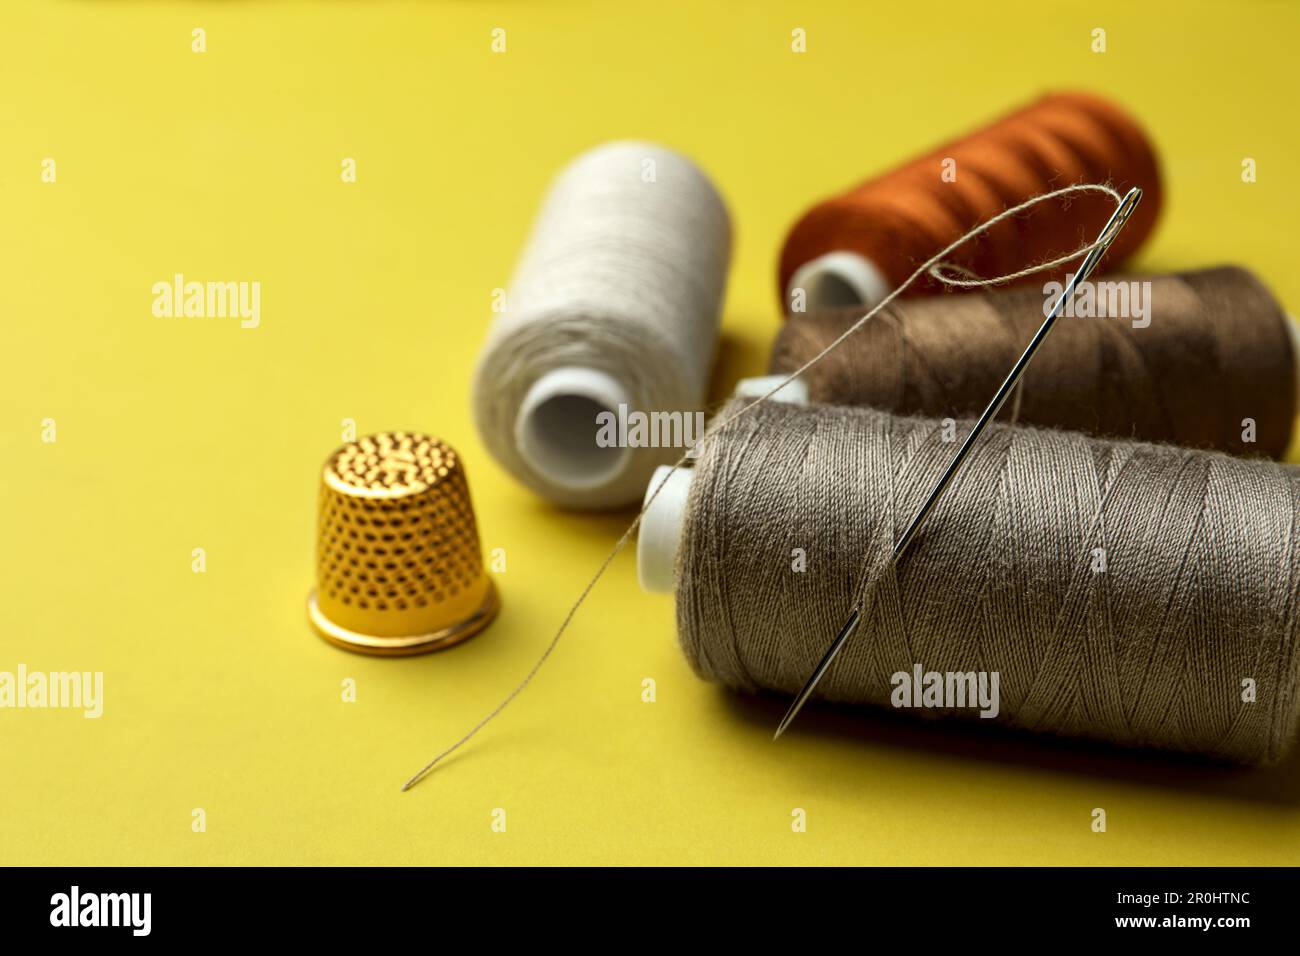 Hilos para coser de colores, botones, dedal para coser Stock Photo